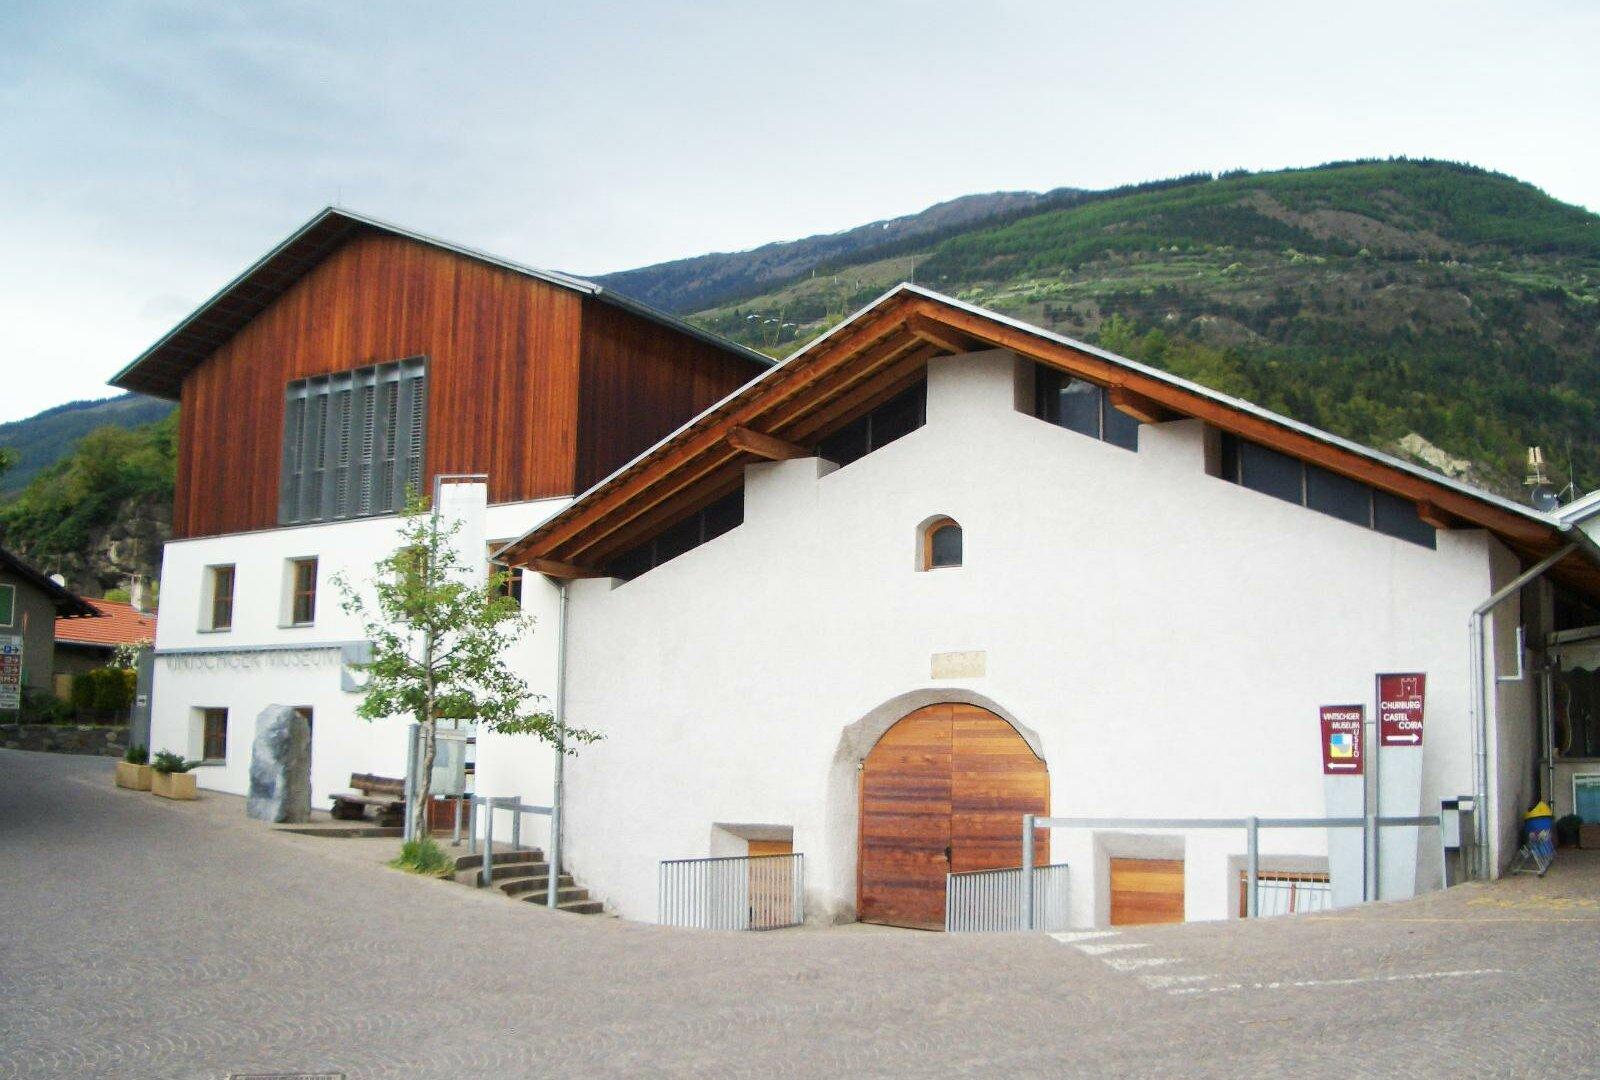 The Vinschgau Museum in Sluderno